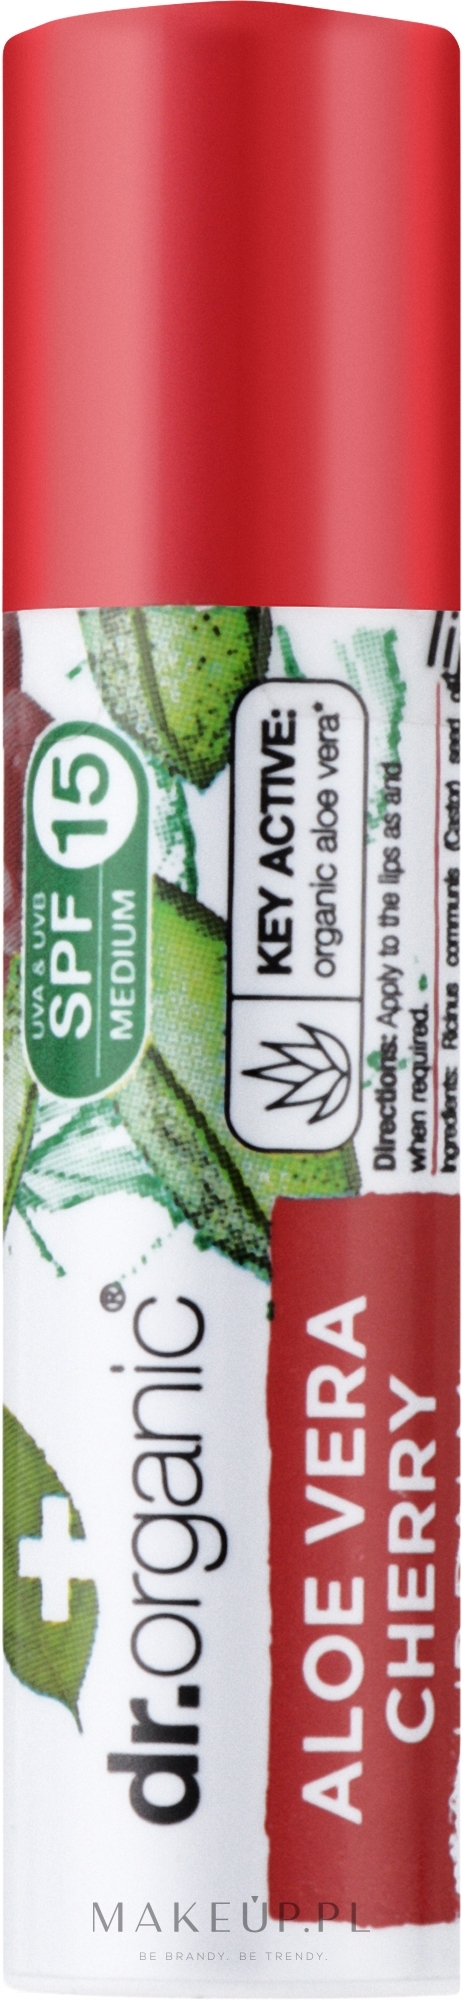 Balsam do ust z aloesem i ekstraktem z wiśni - Dr Organic Bioactive Skincare Aloe Vera Cherry Lip Balm SPF15 — Zdjęcie 5.7 ml